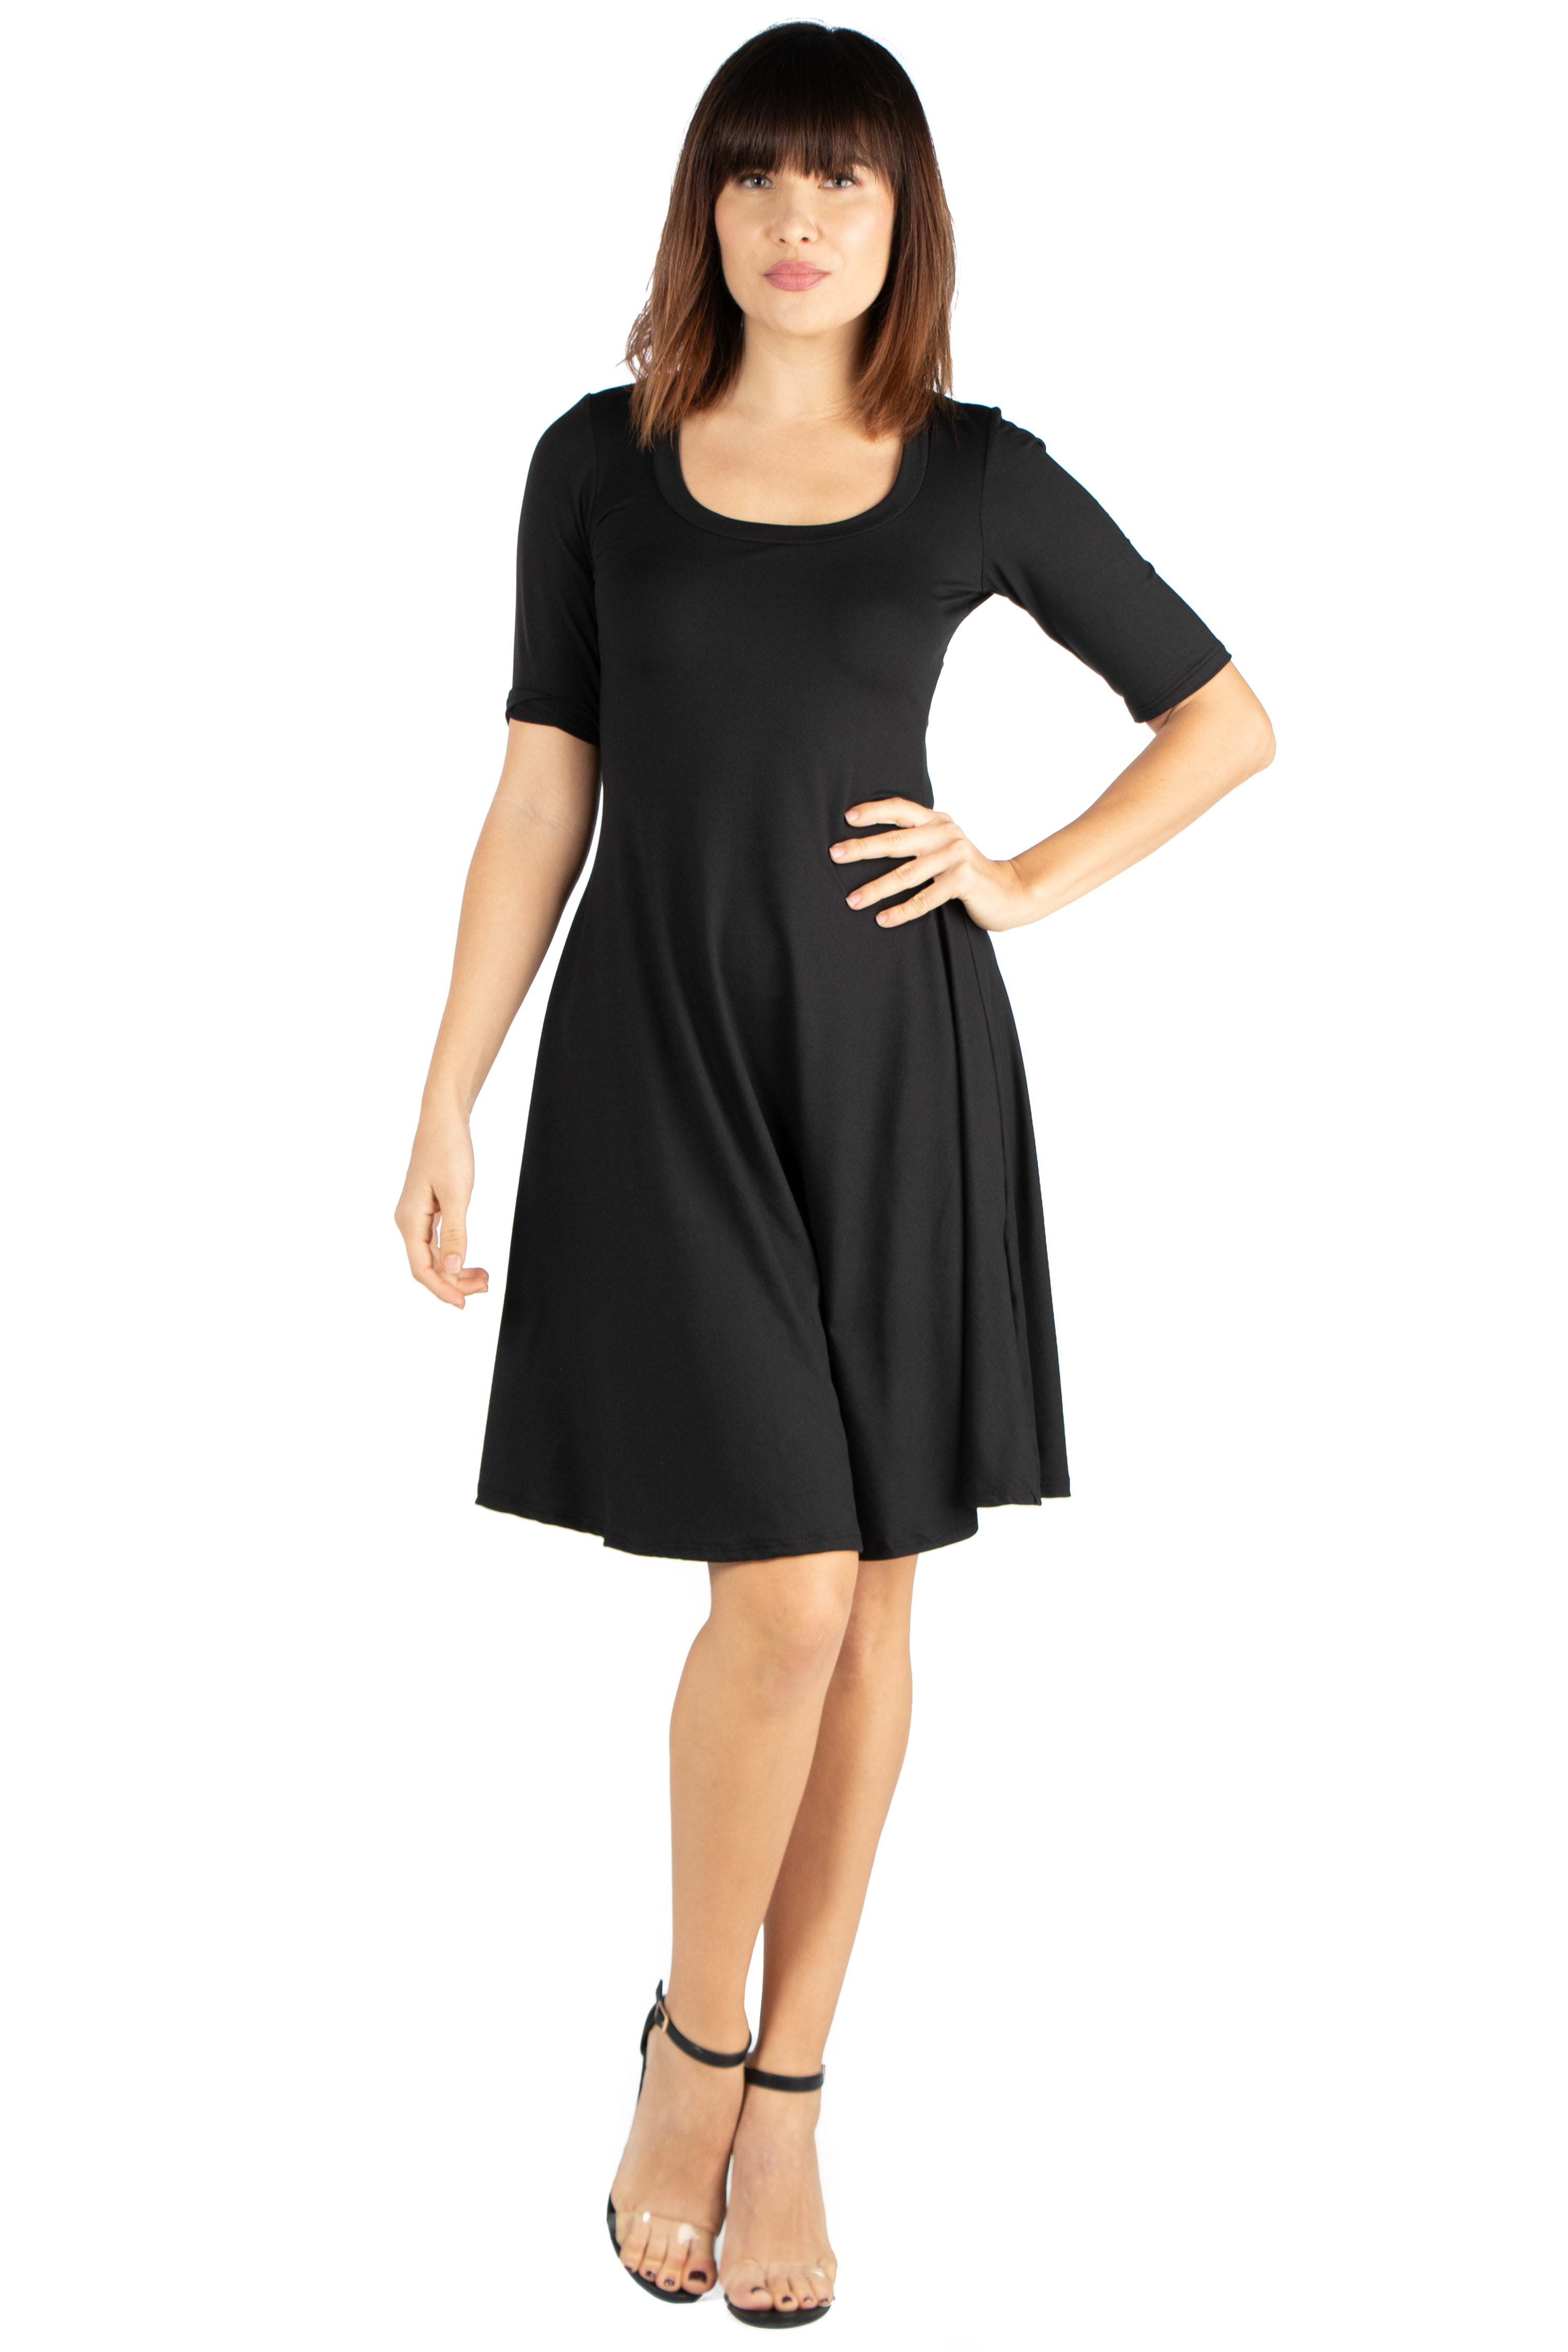 24seven Comfort Apparel Elbow Sleeve Knee Length Dress in Black Size S ...